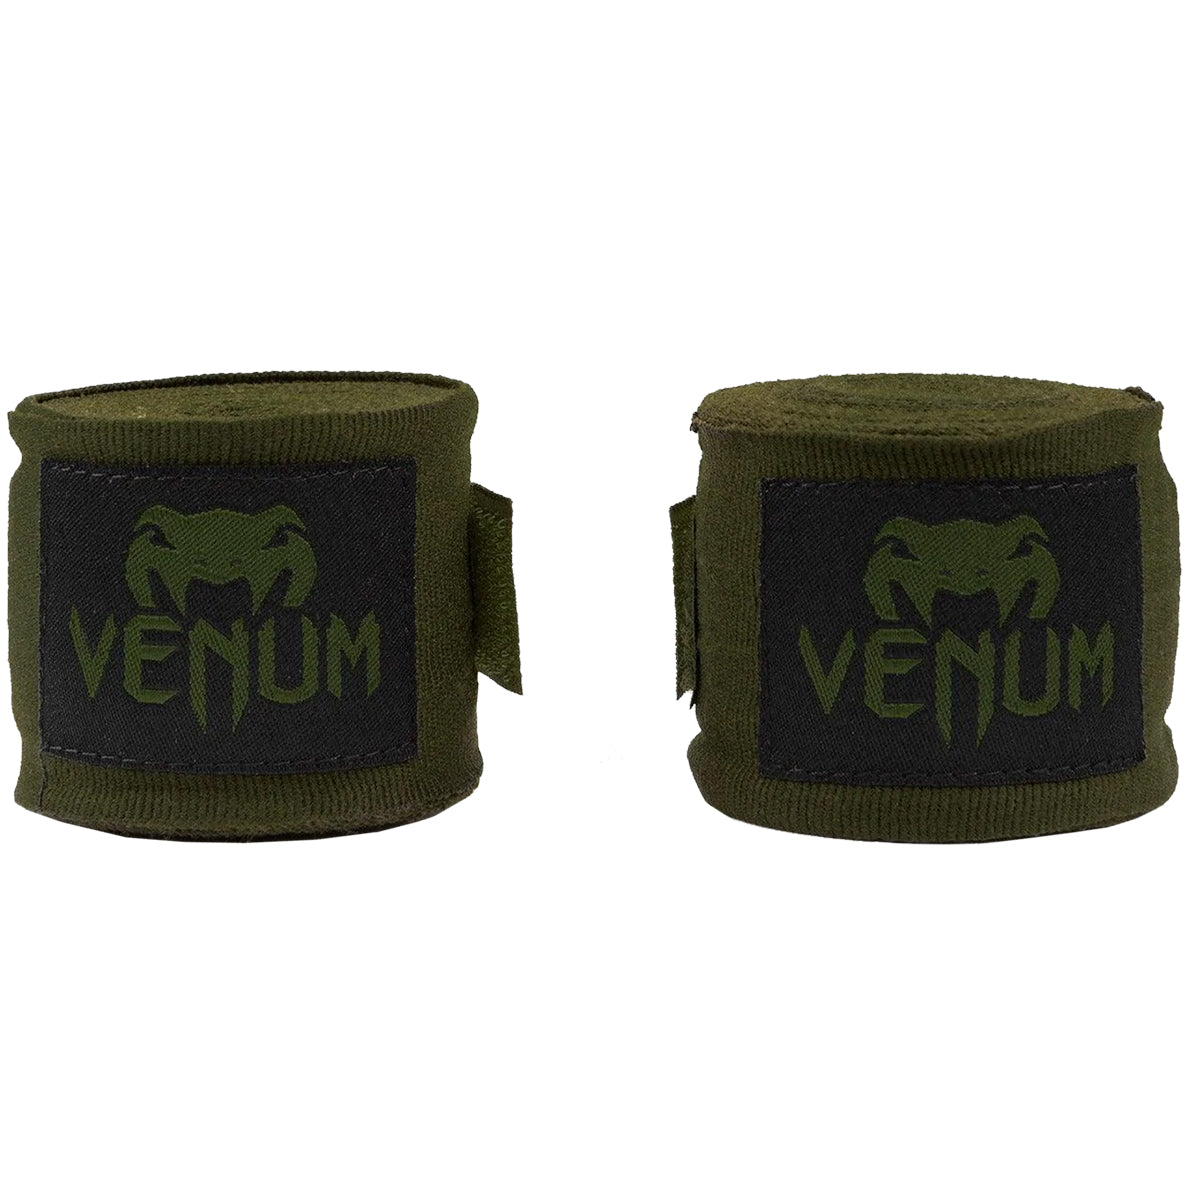 Venum Kontact 4m Boxing Handwraps - Khaki/Black Venum